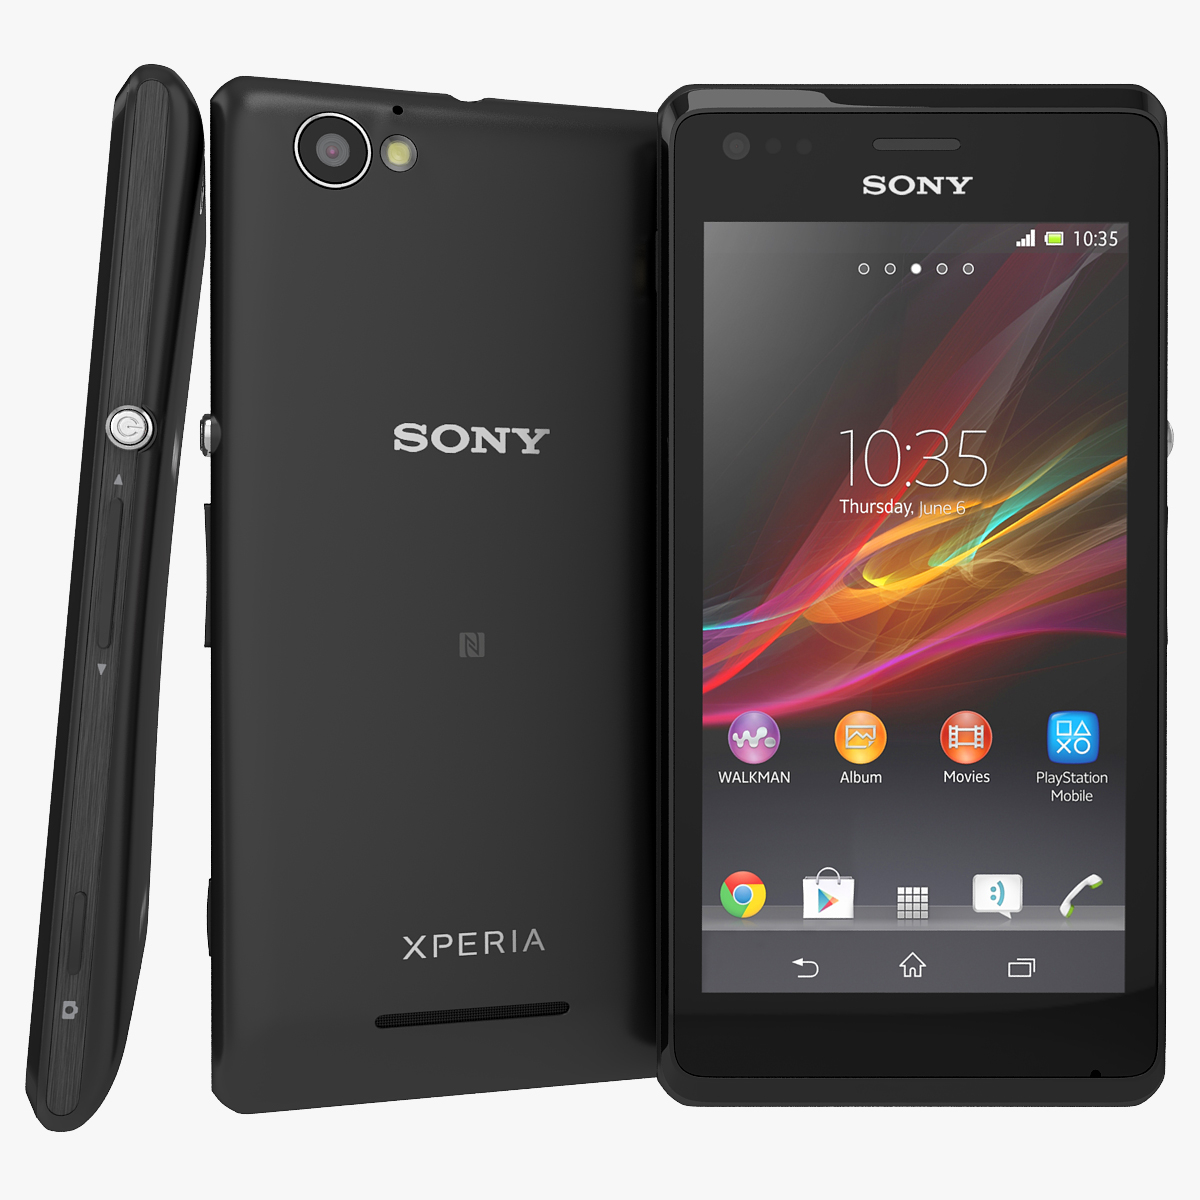 Мобильный телефон sony xperia. Sony Xperia c2005. Sony Xperia m c2005. Sony Xperia c1905. Sony Xperia c6503.